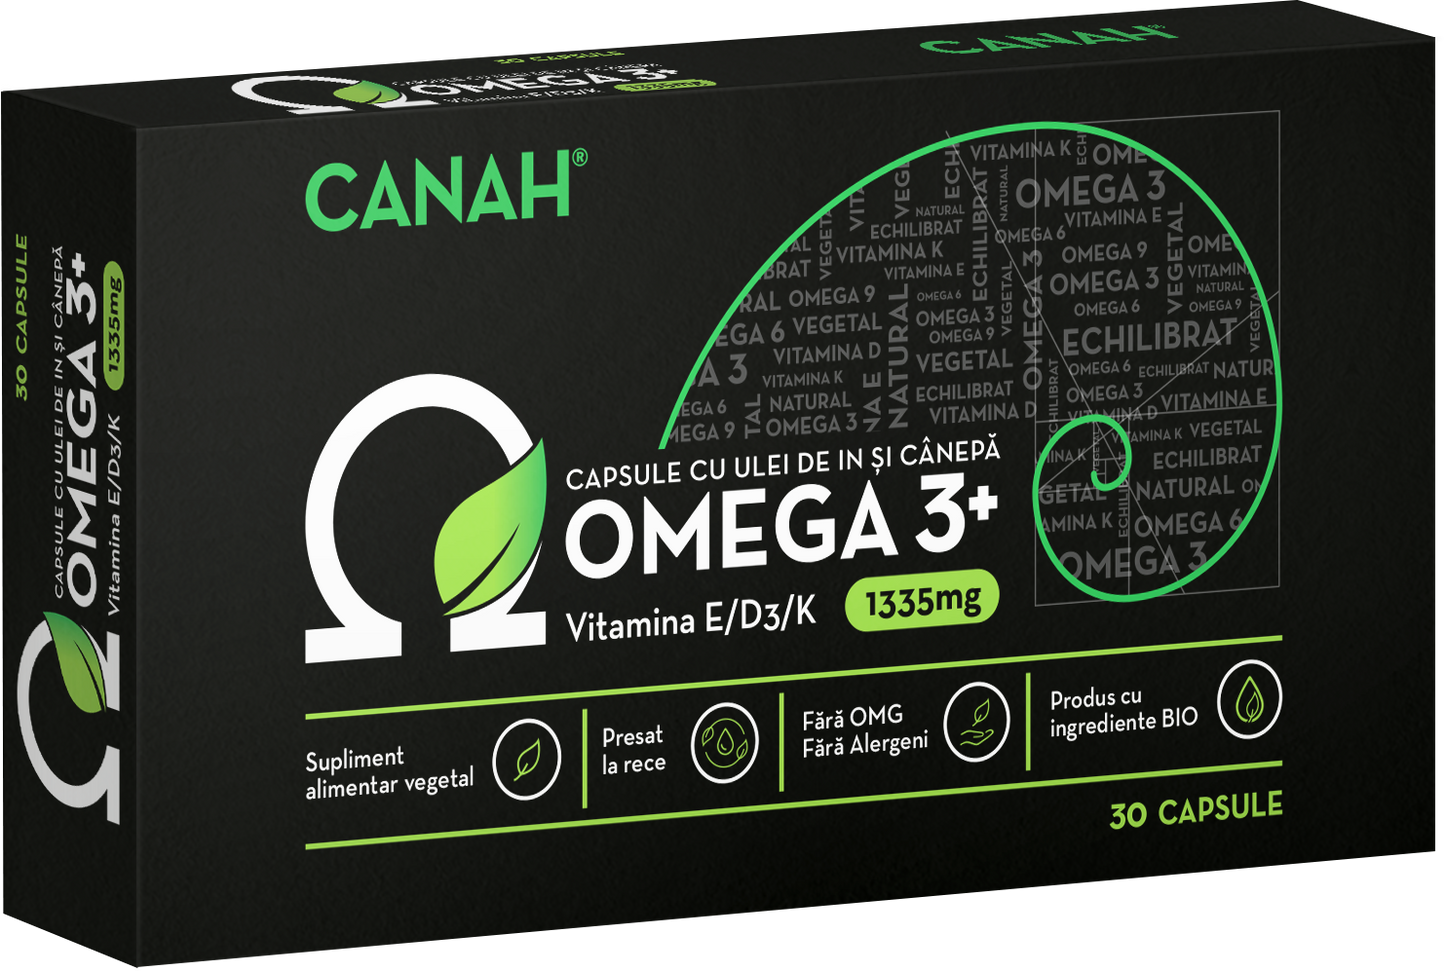 Capsules with flax and hemp oil -Omega 3 - 30 capsules